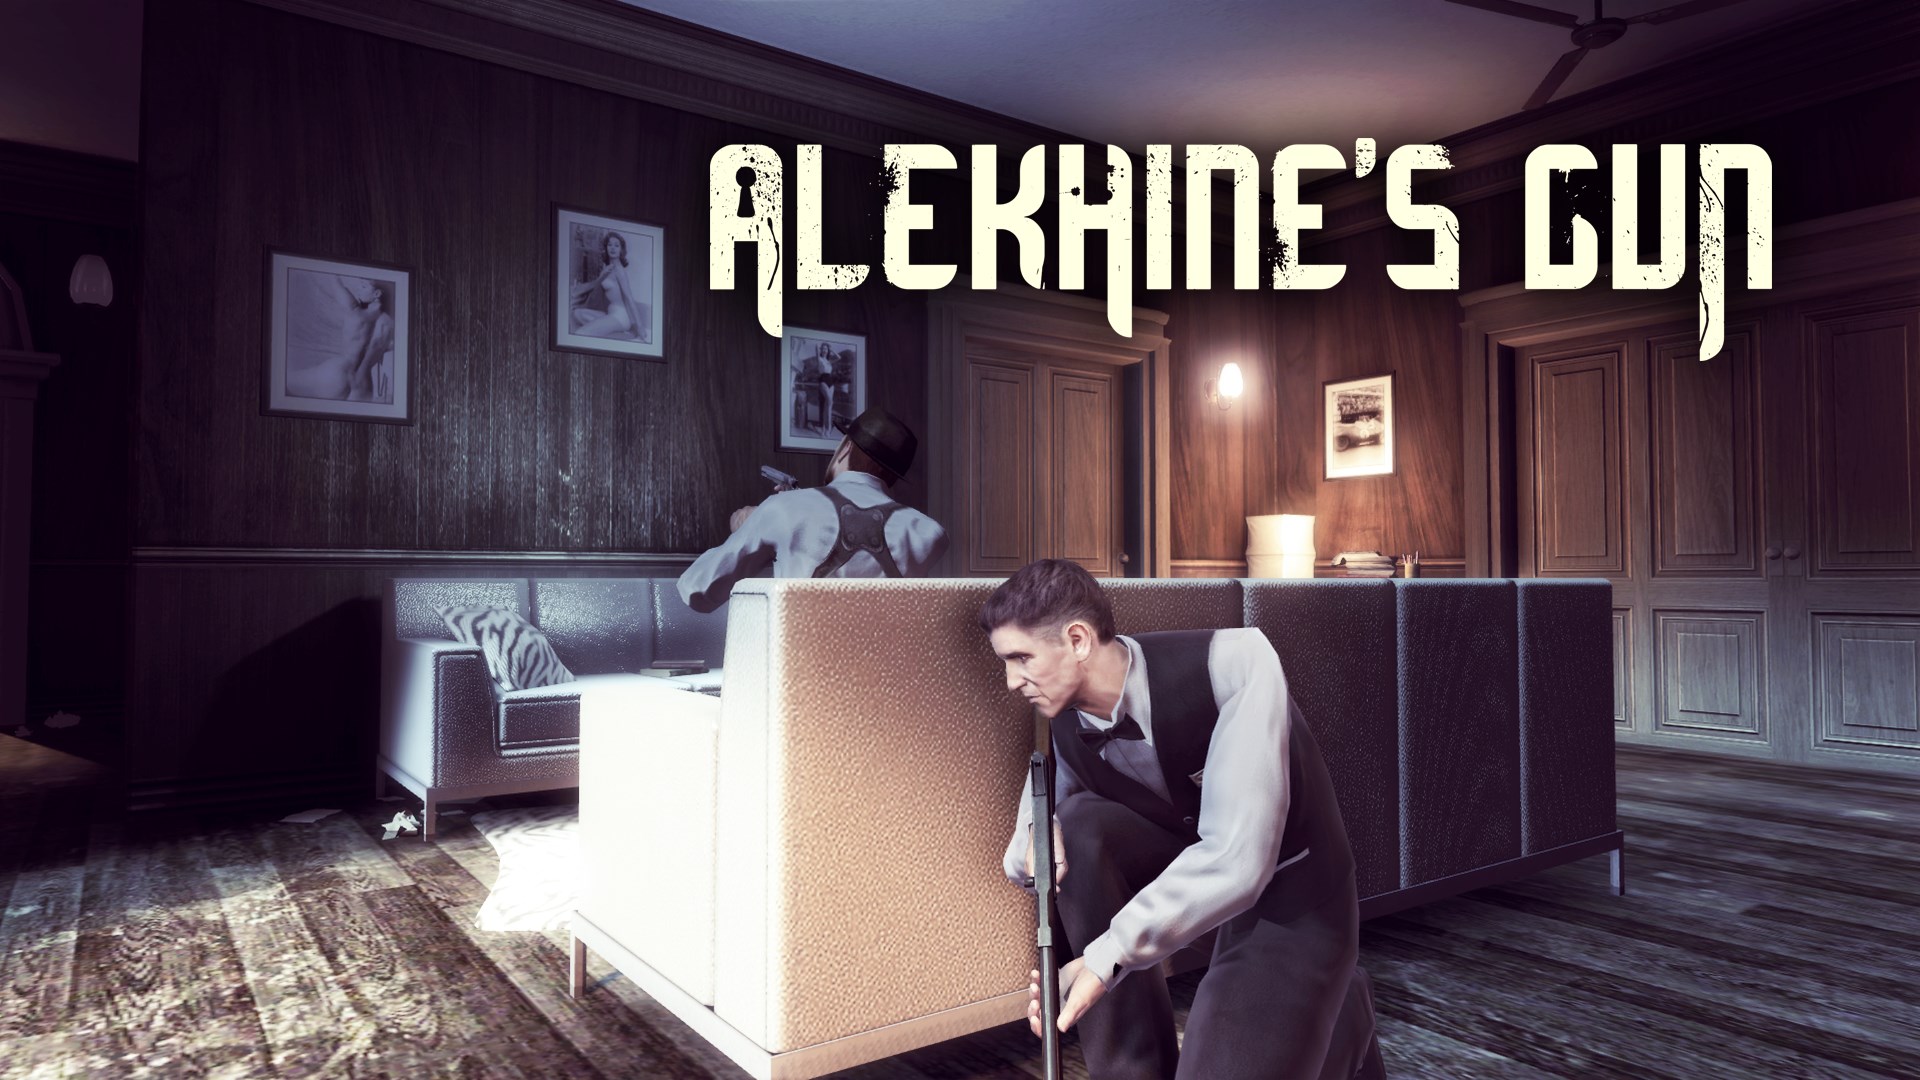 Alekhine's Gun PlayStation 4 Review